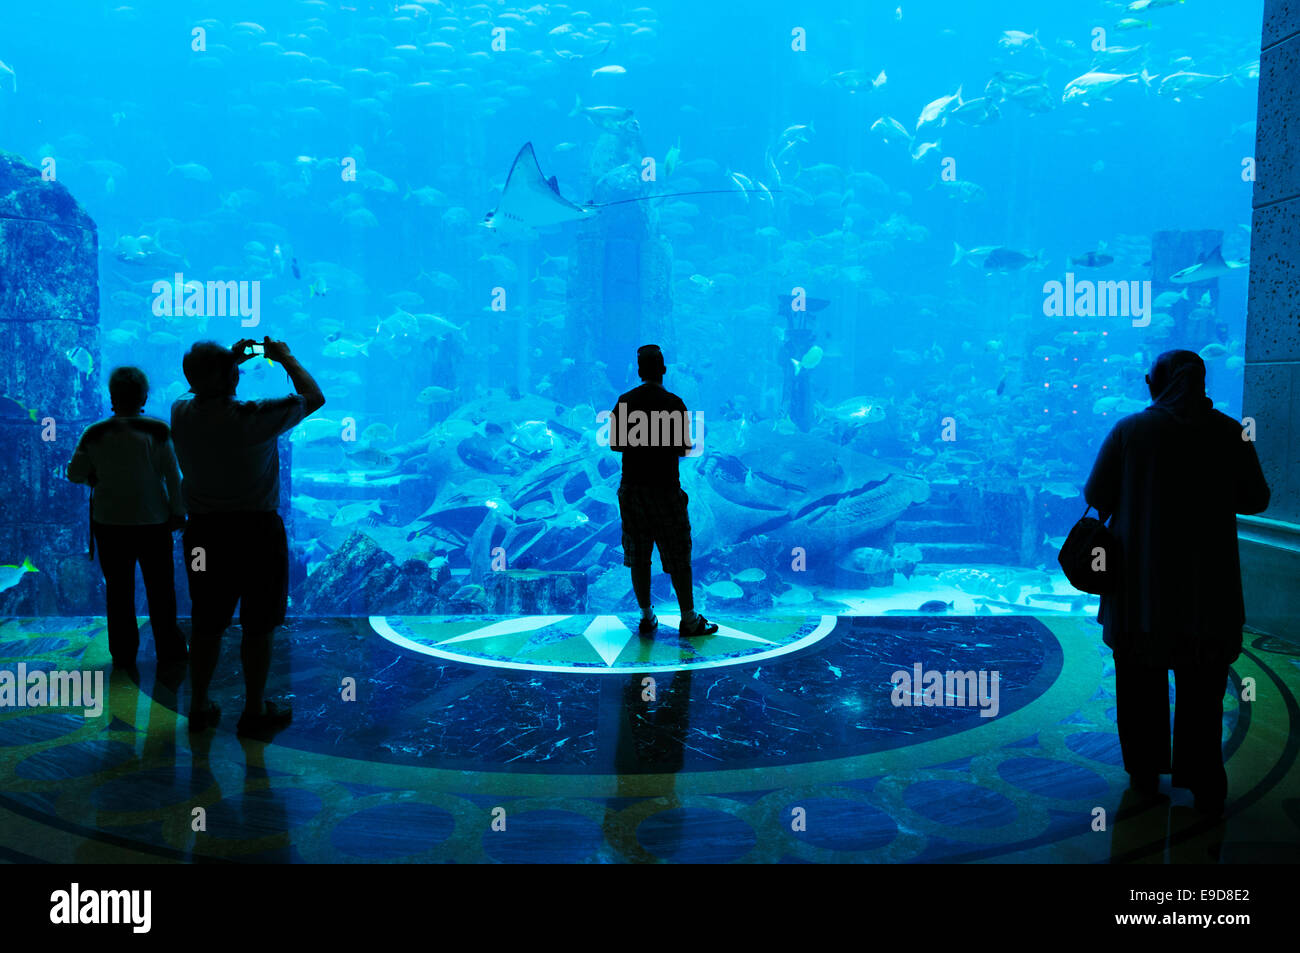 silhouettes of people against a big aquarium Stock Photo